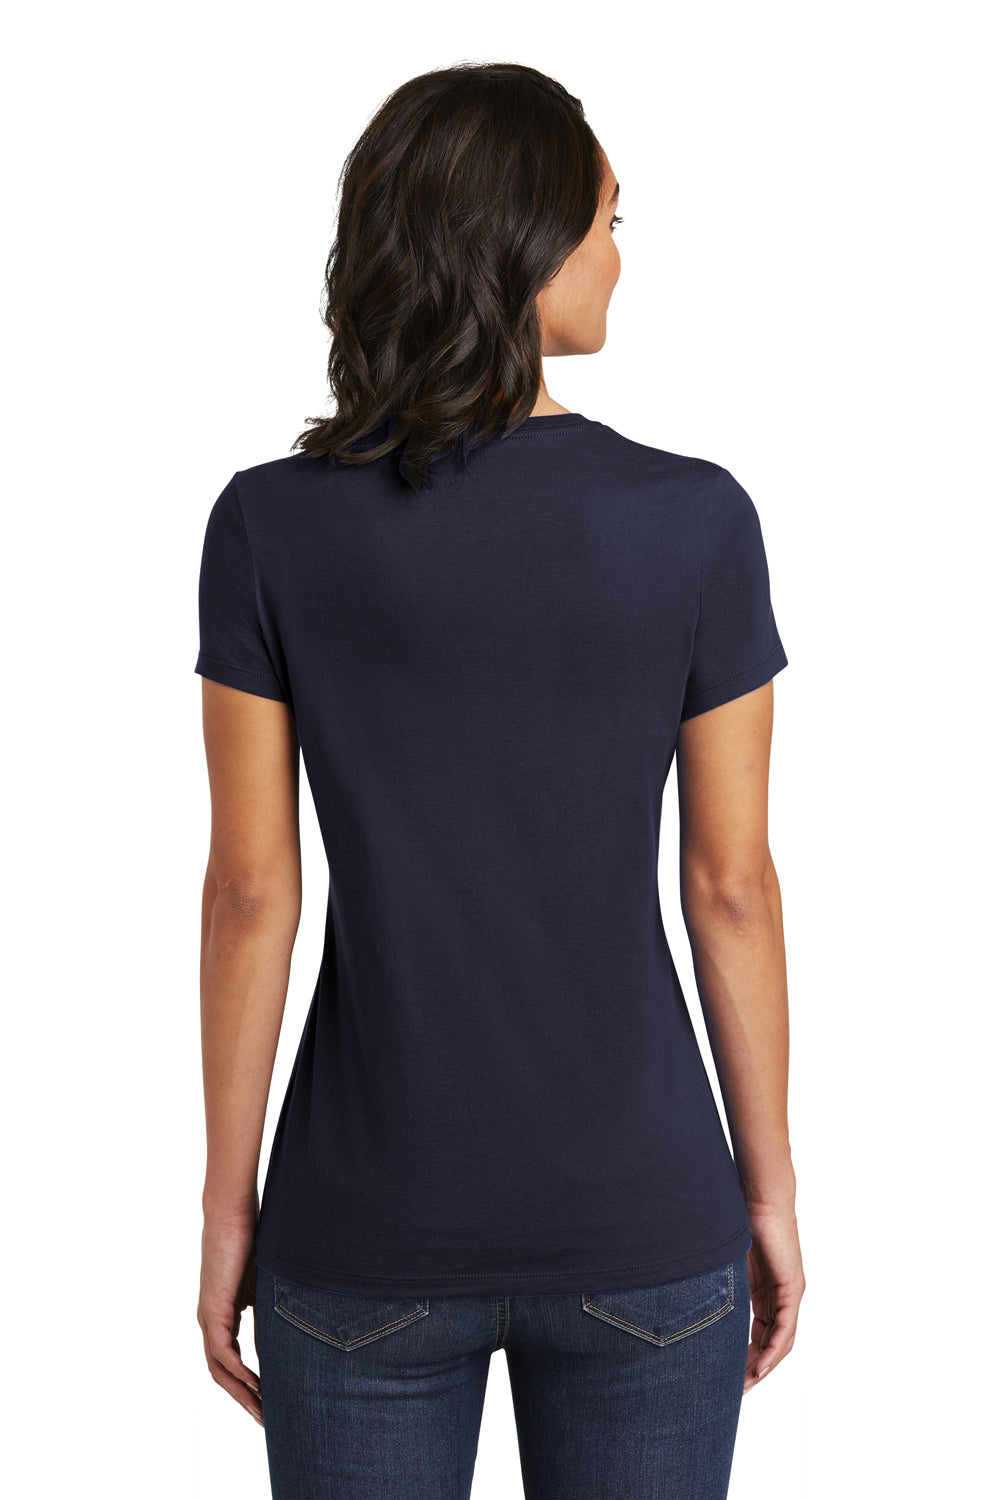 District DT6002 Womens Very Important Short Sleeve Crewneck T-Shirt Navy Blue Back